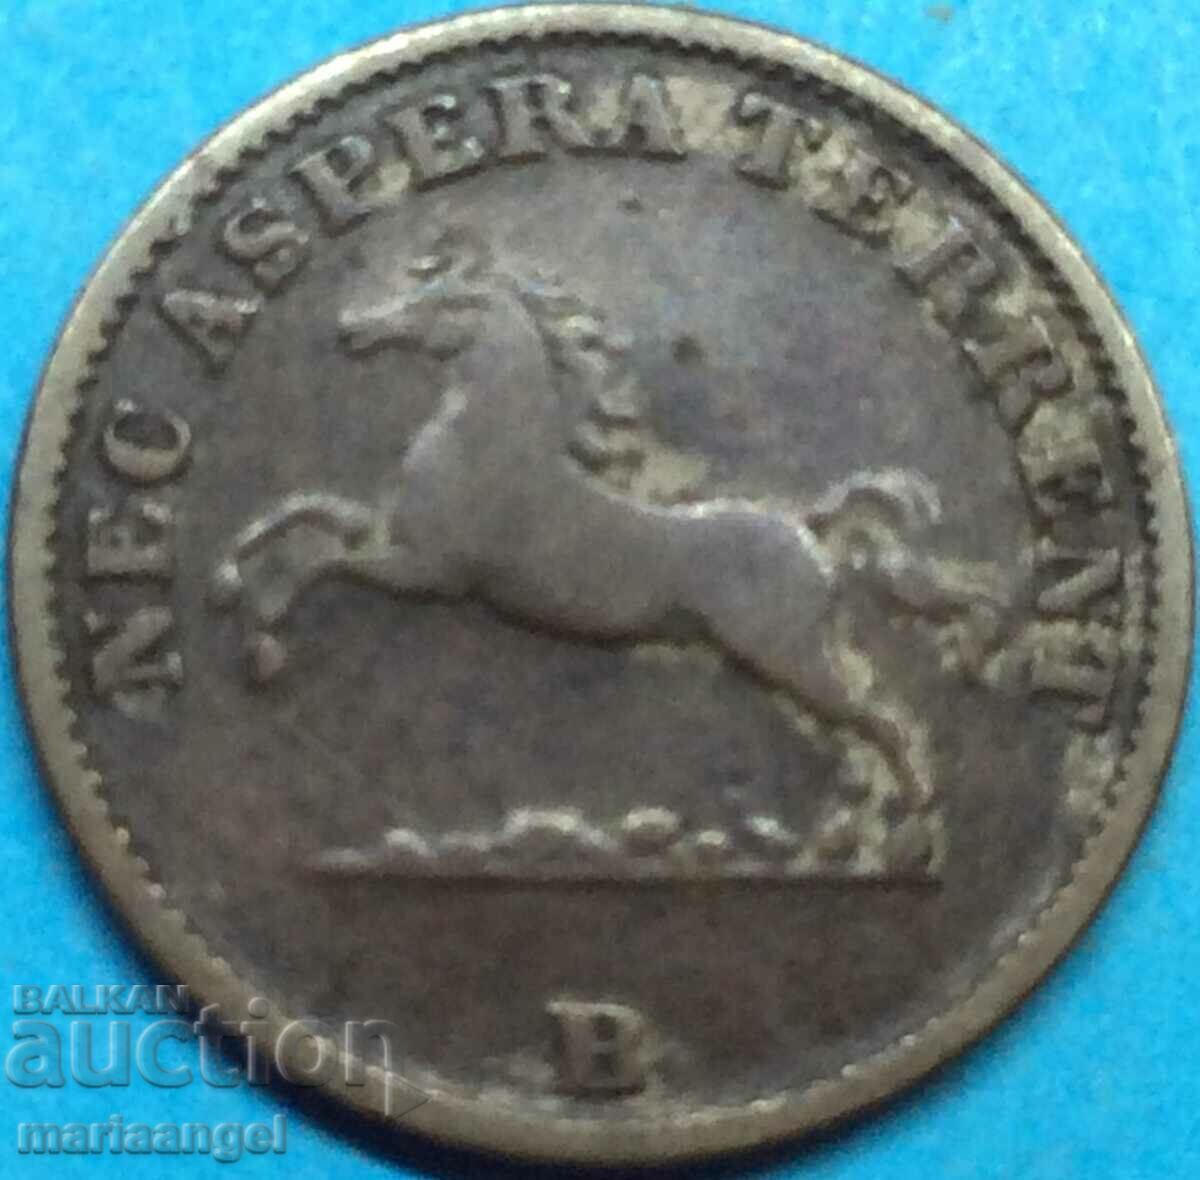 6 pfennig 1855 Γερμανία Ανόβερο ασήμι - σπάνιο